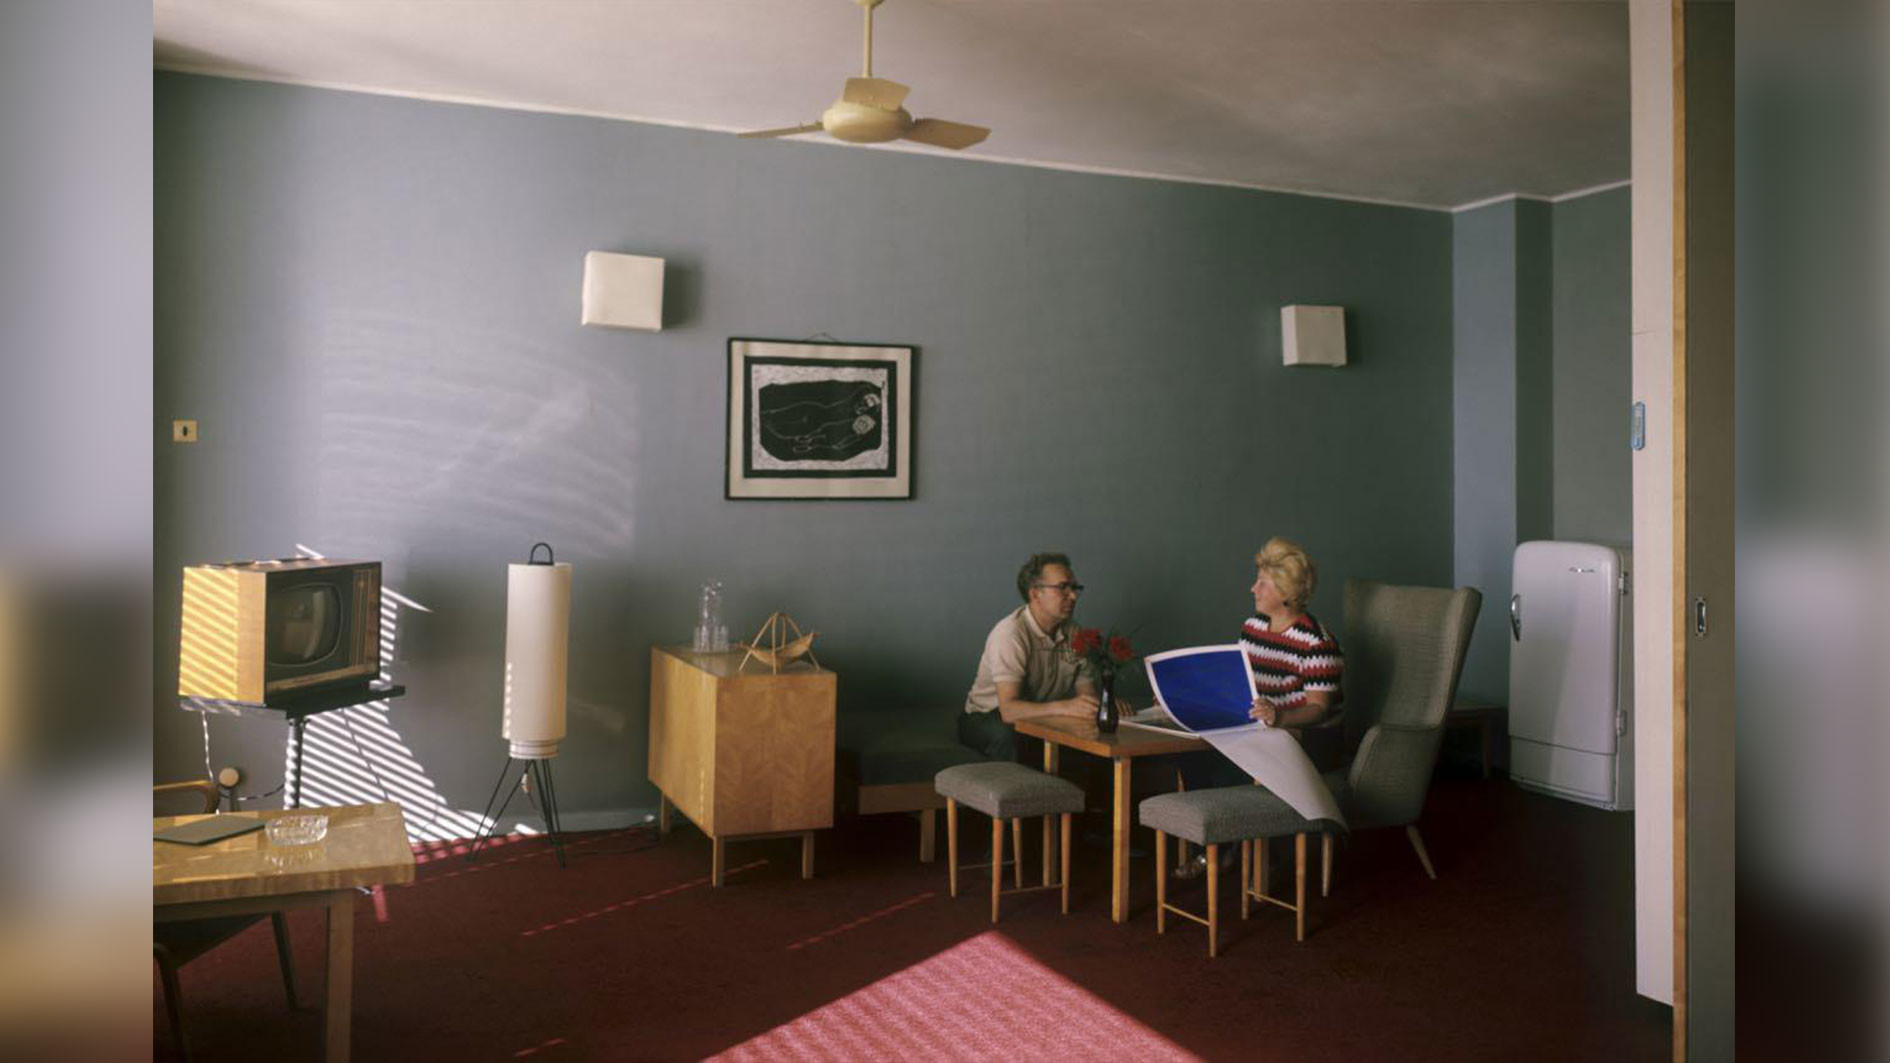 Палата класса люкс. Объединённый санаторий "Сочи". Год 1968. Фото: © РИА Новости